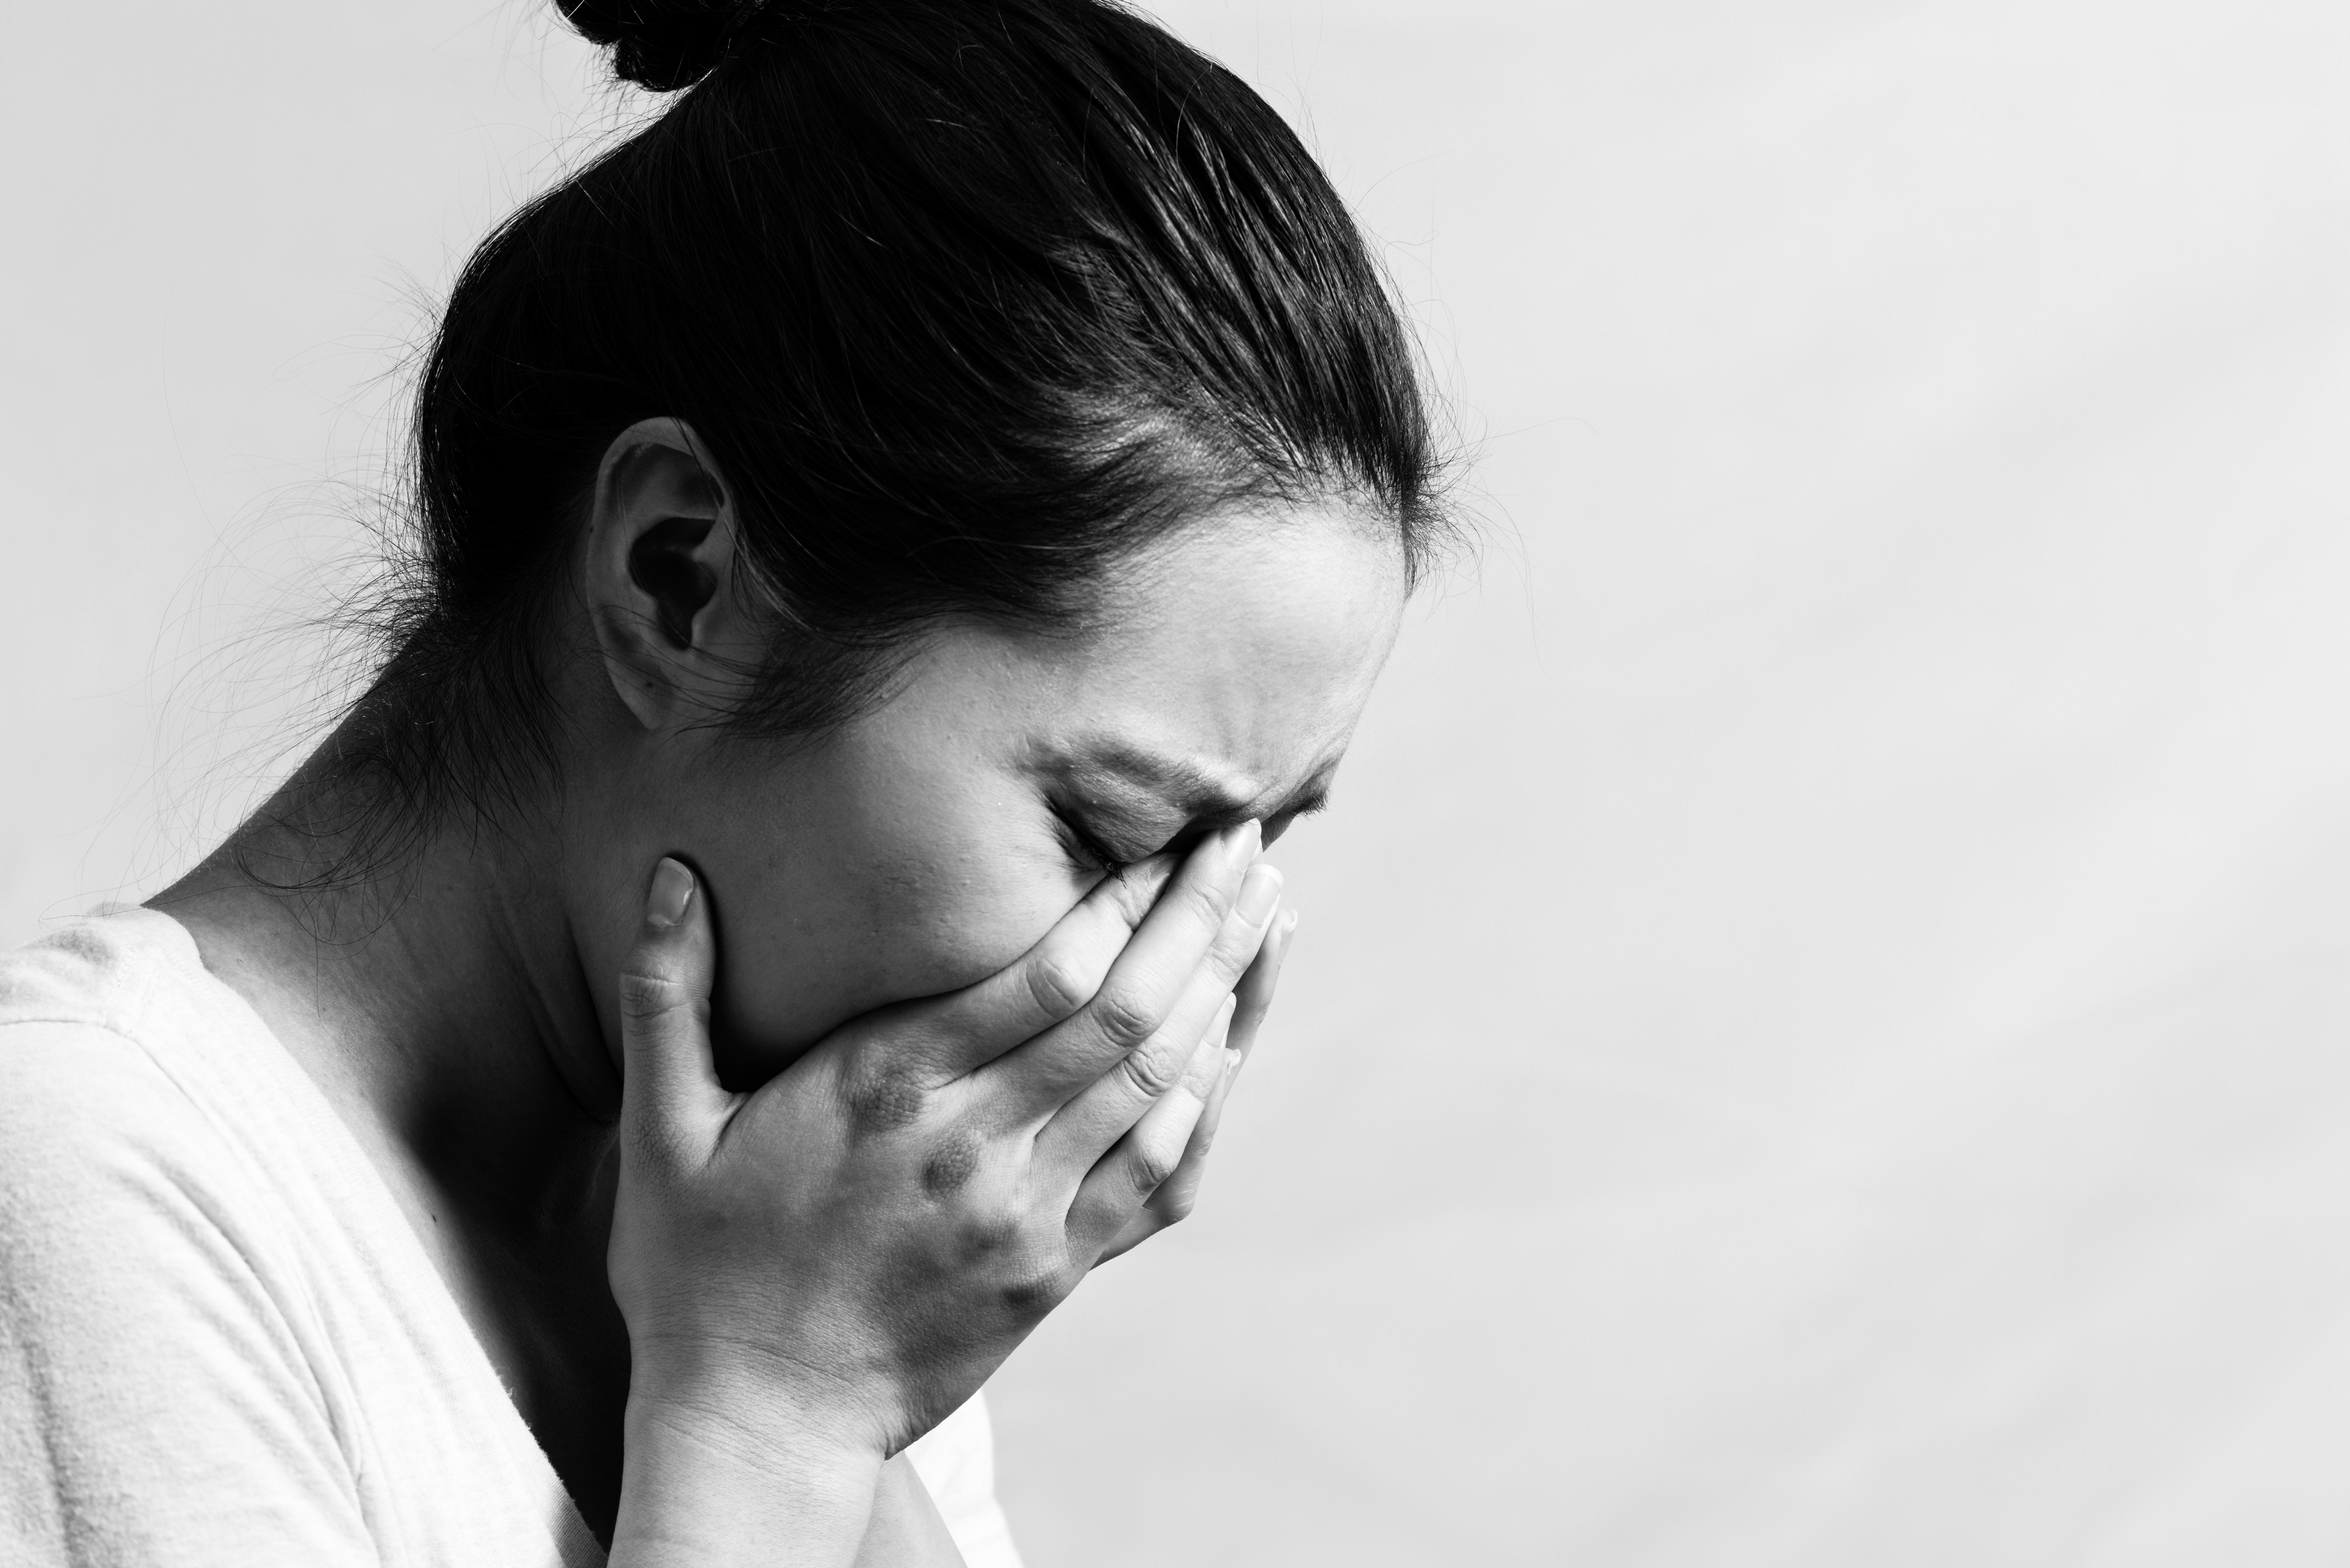 Femme en train de pleurer | Source : Shutterstock